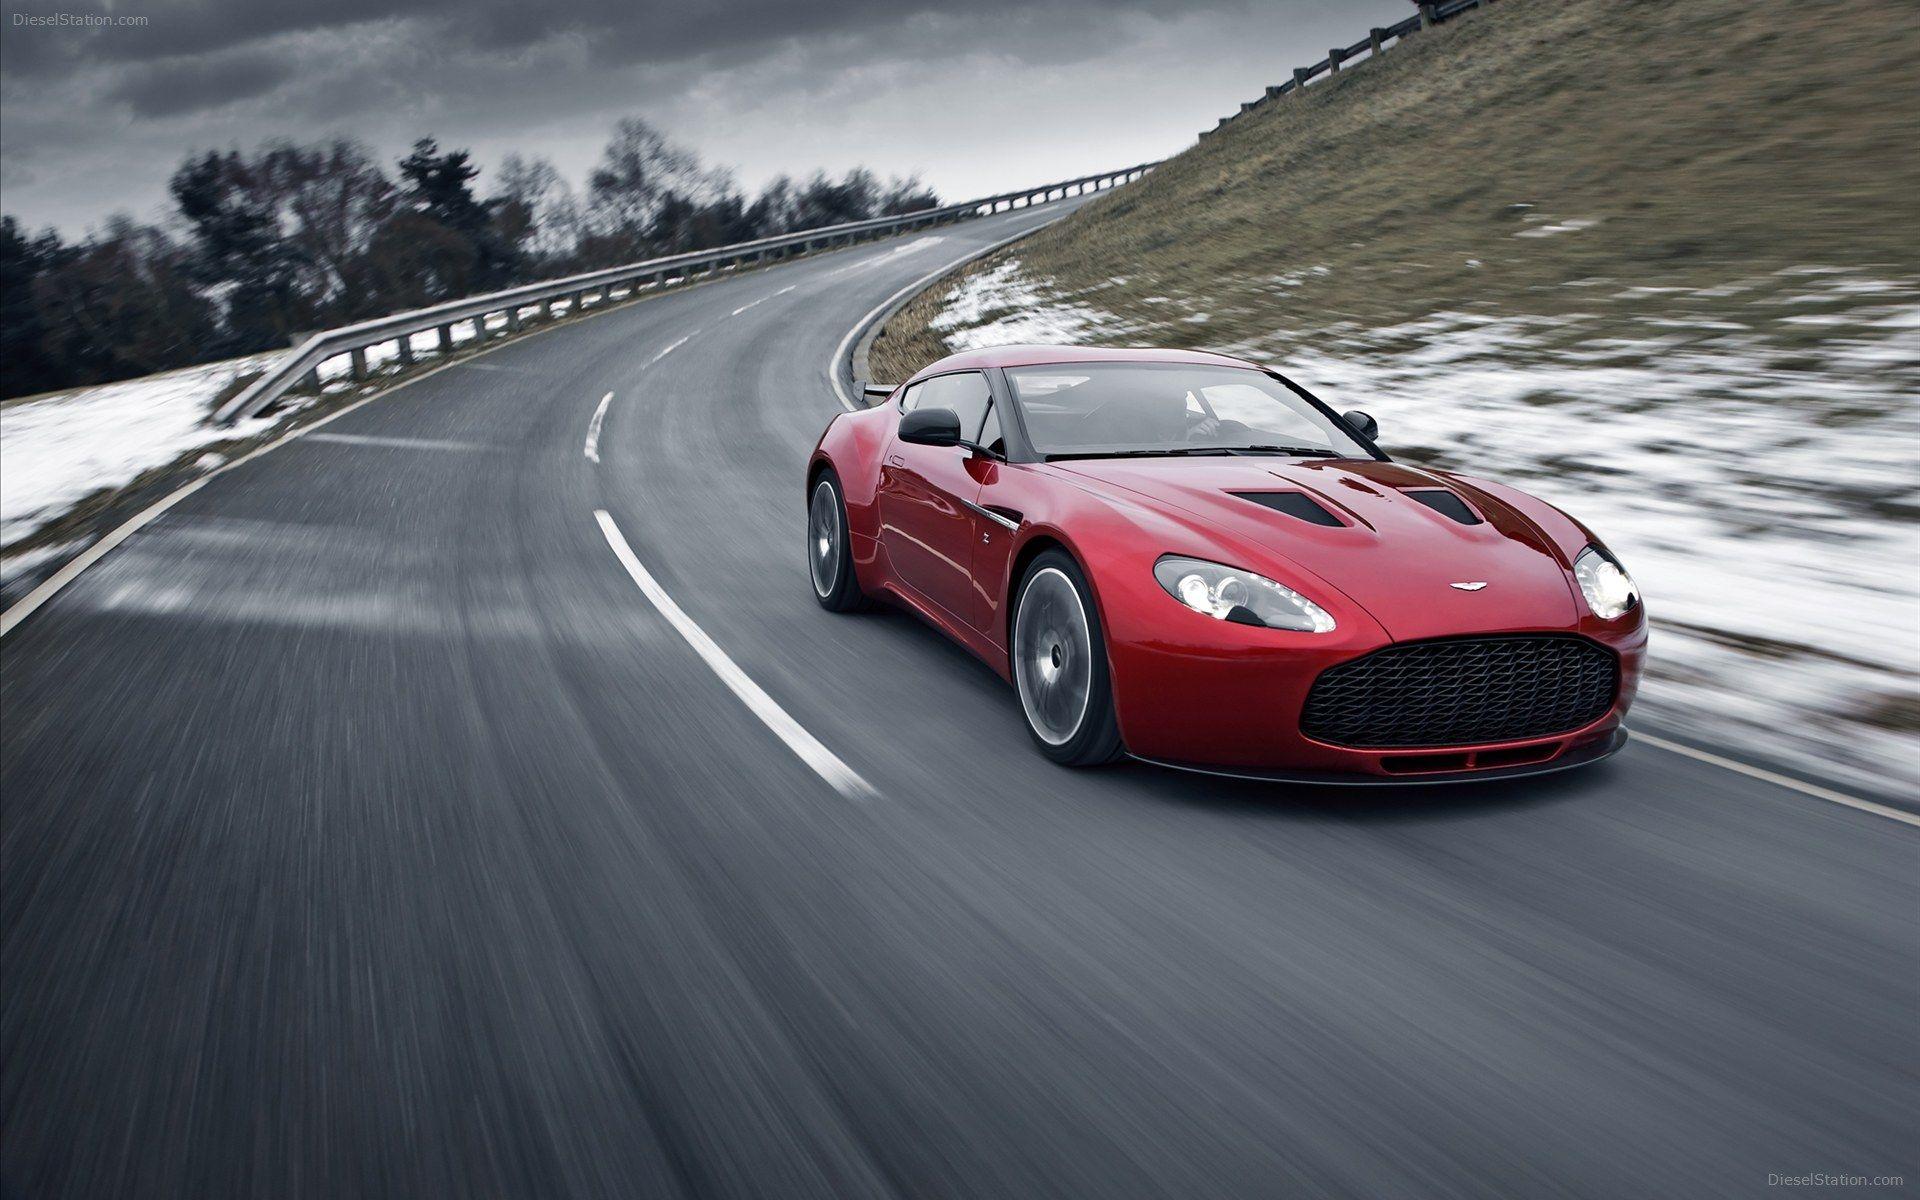 Aston Martin Vanquish Zagato red supercar 2016 wallpaper. cars